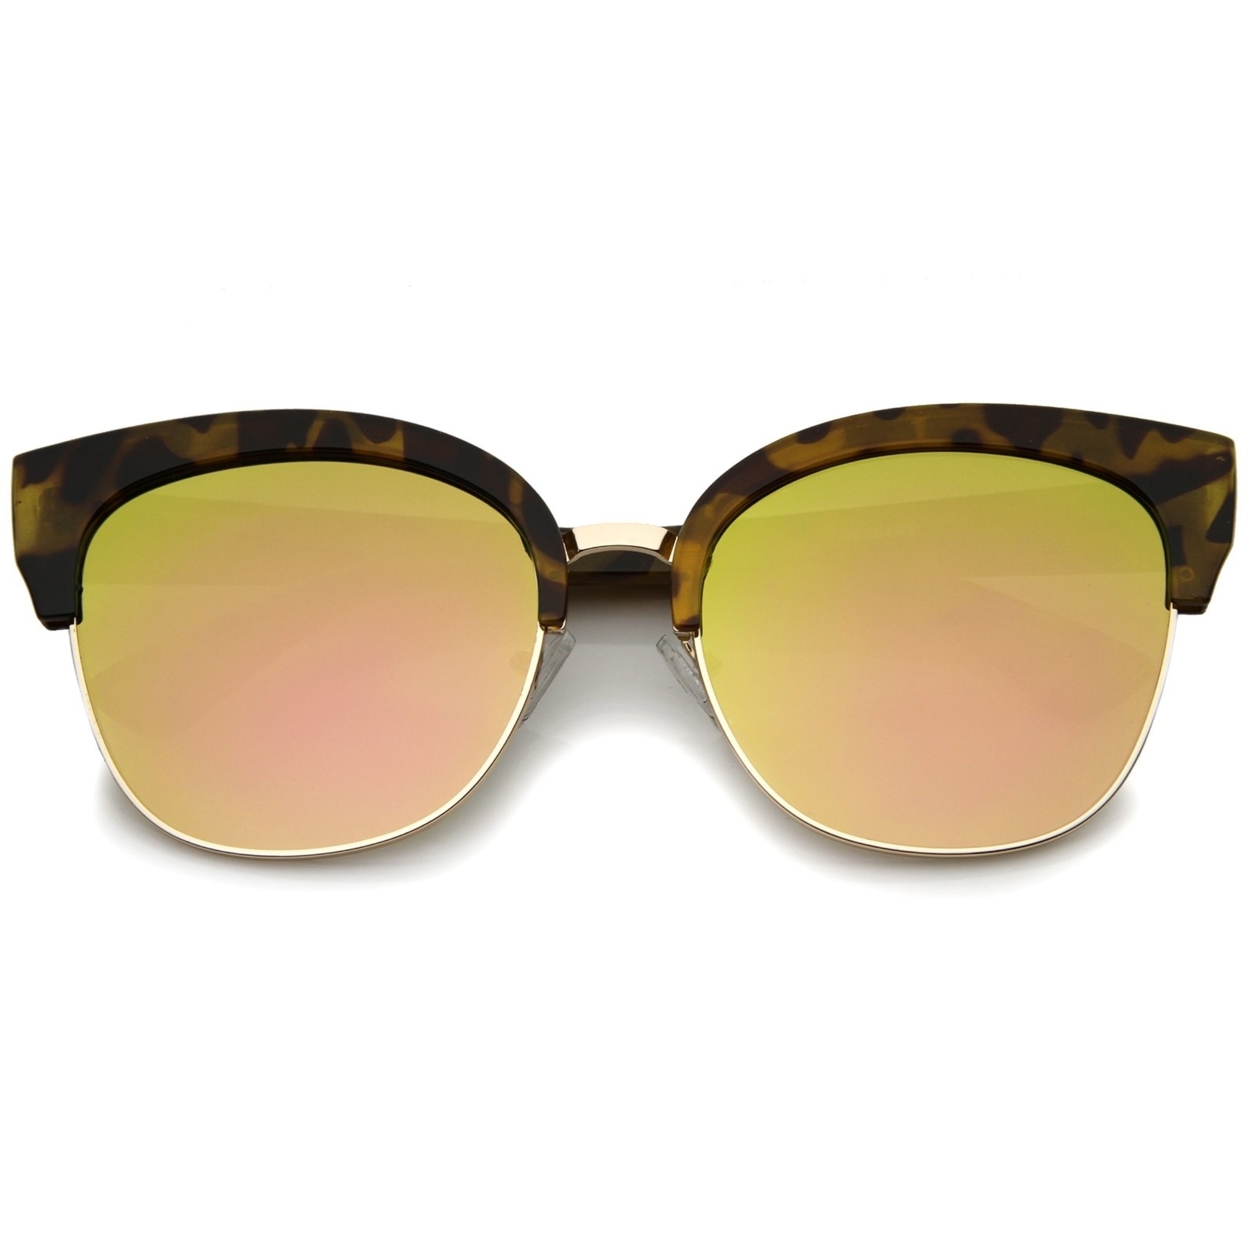 Modern Oversized Half-Frame Color Mirror Flat Lens Cat Eye Sunglasses 58mm - Tortoise / Magenta Mirror